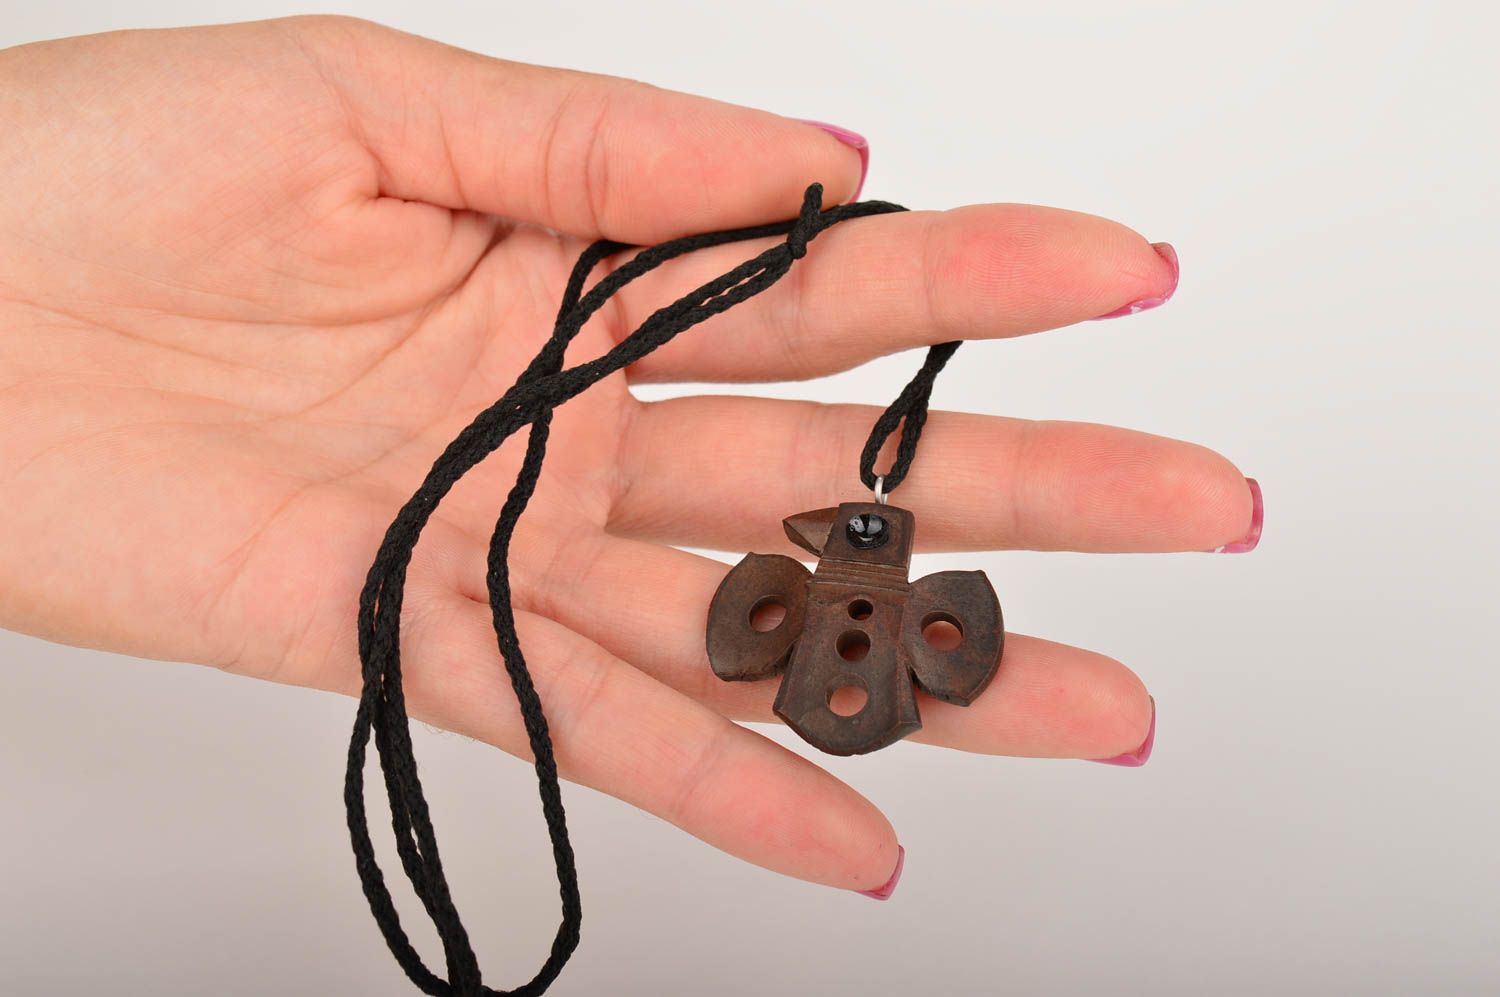 Handmade pendant designer pendant clay jewelry unusual accessory gift ideas photo 2